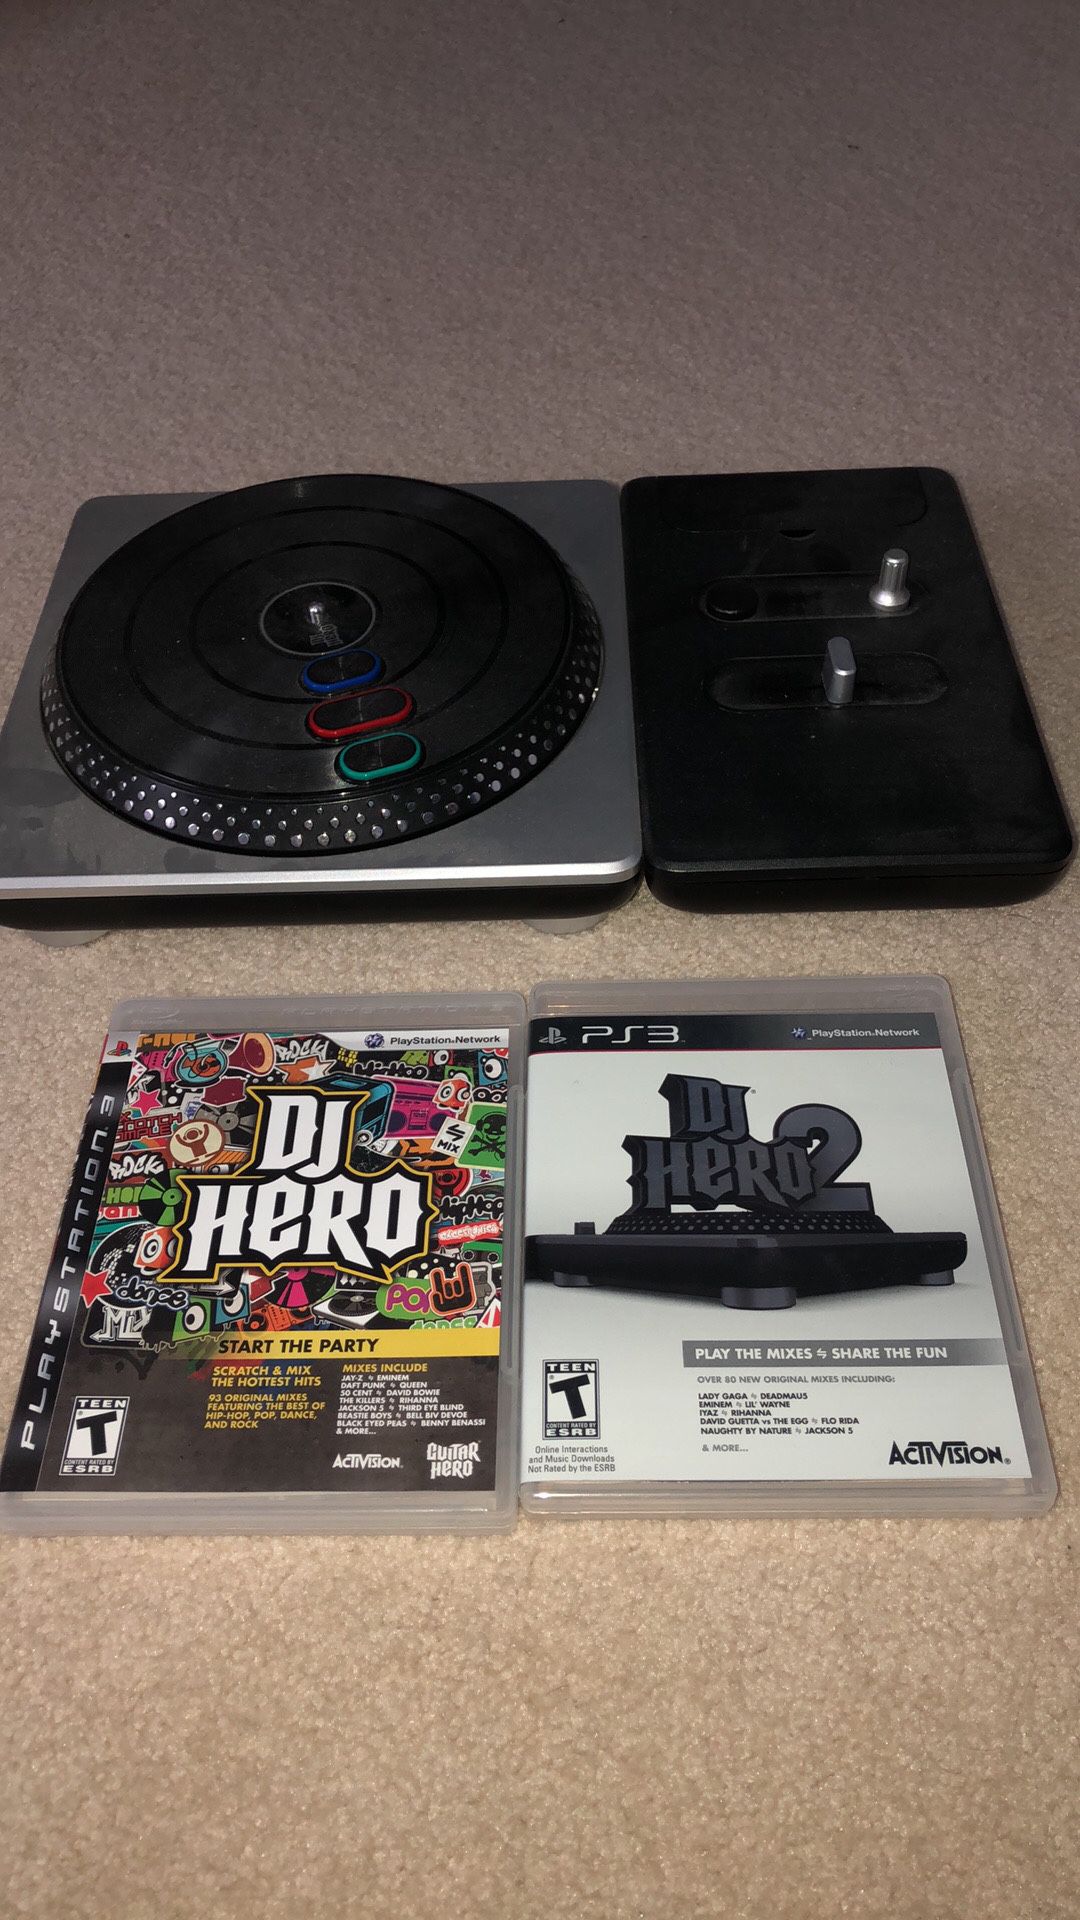 DJ Hero 1 & 2 with Turntable